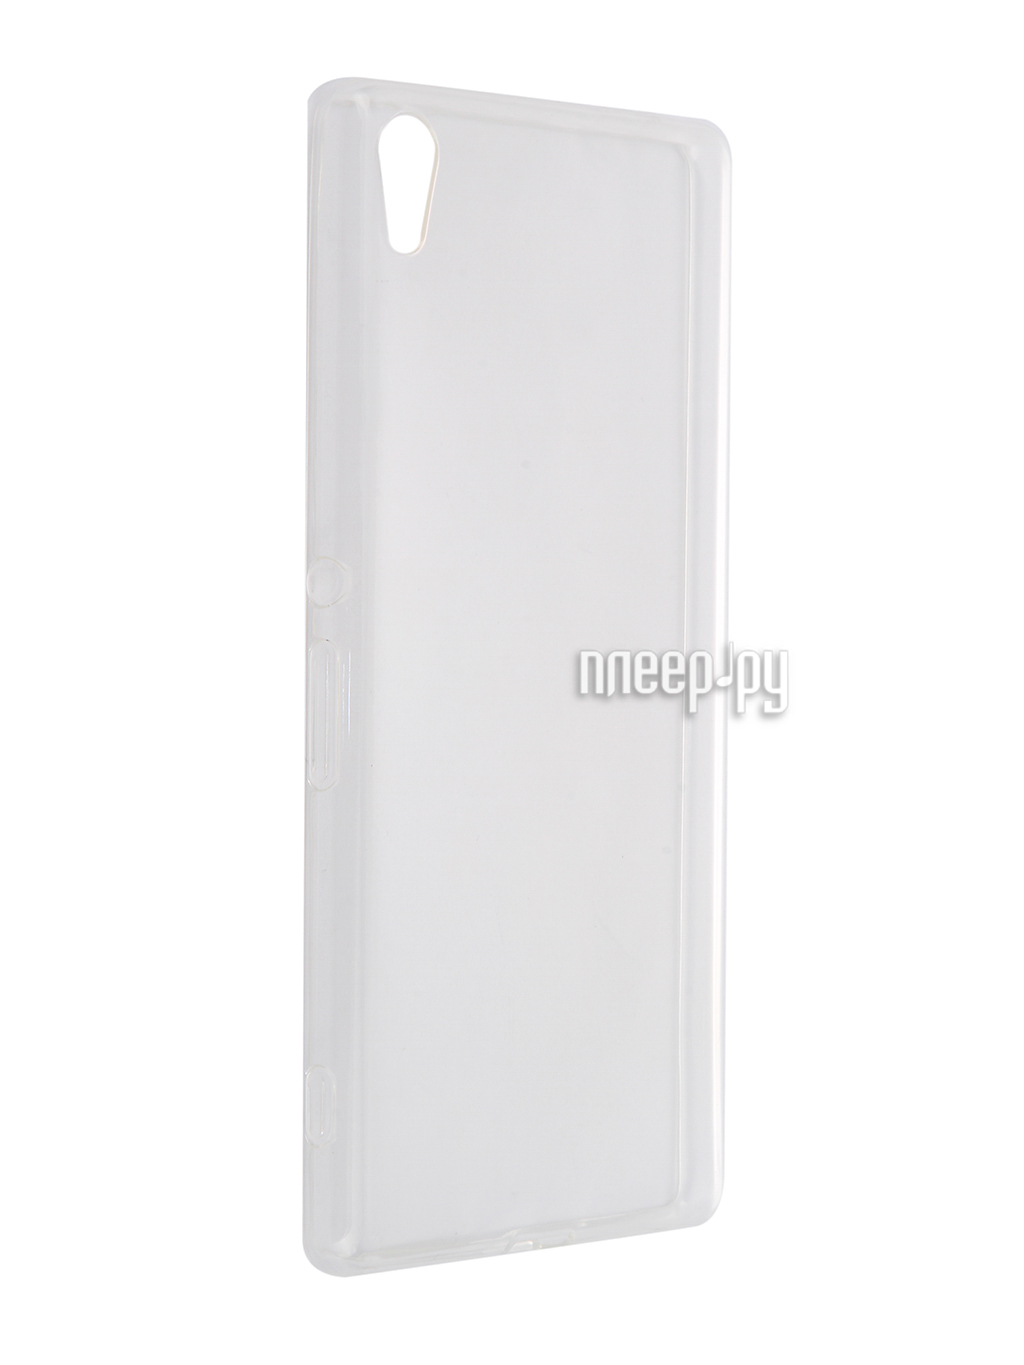  - Sony Xperia XA Ultra Gecko  Transparent White S-G-SONXAU-WH 